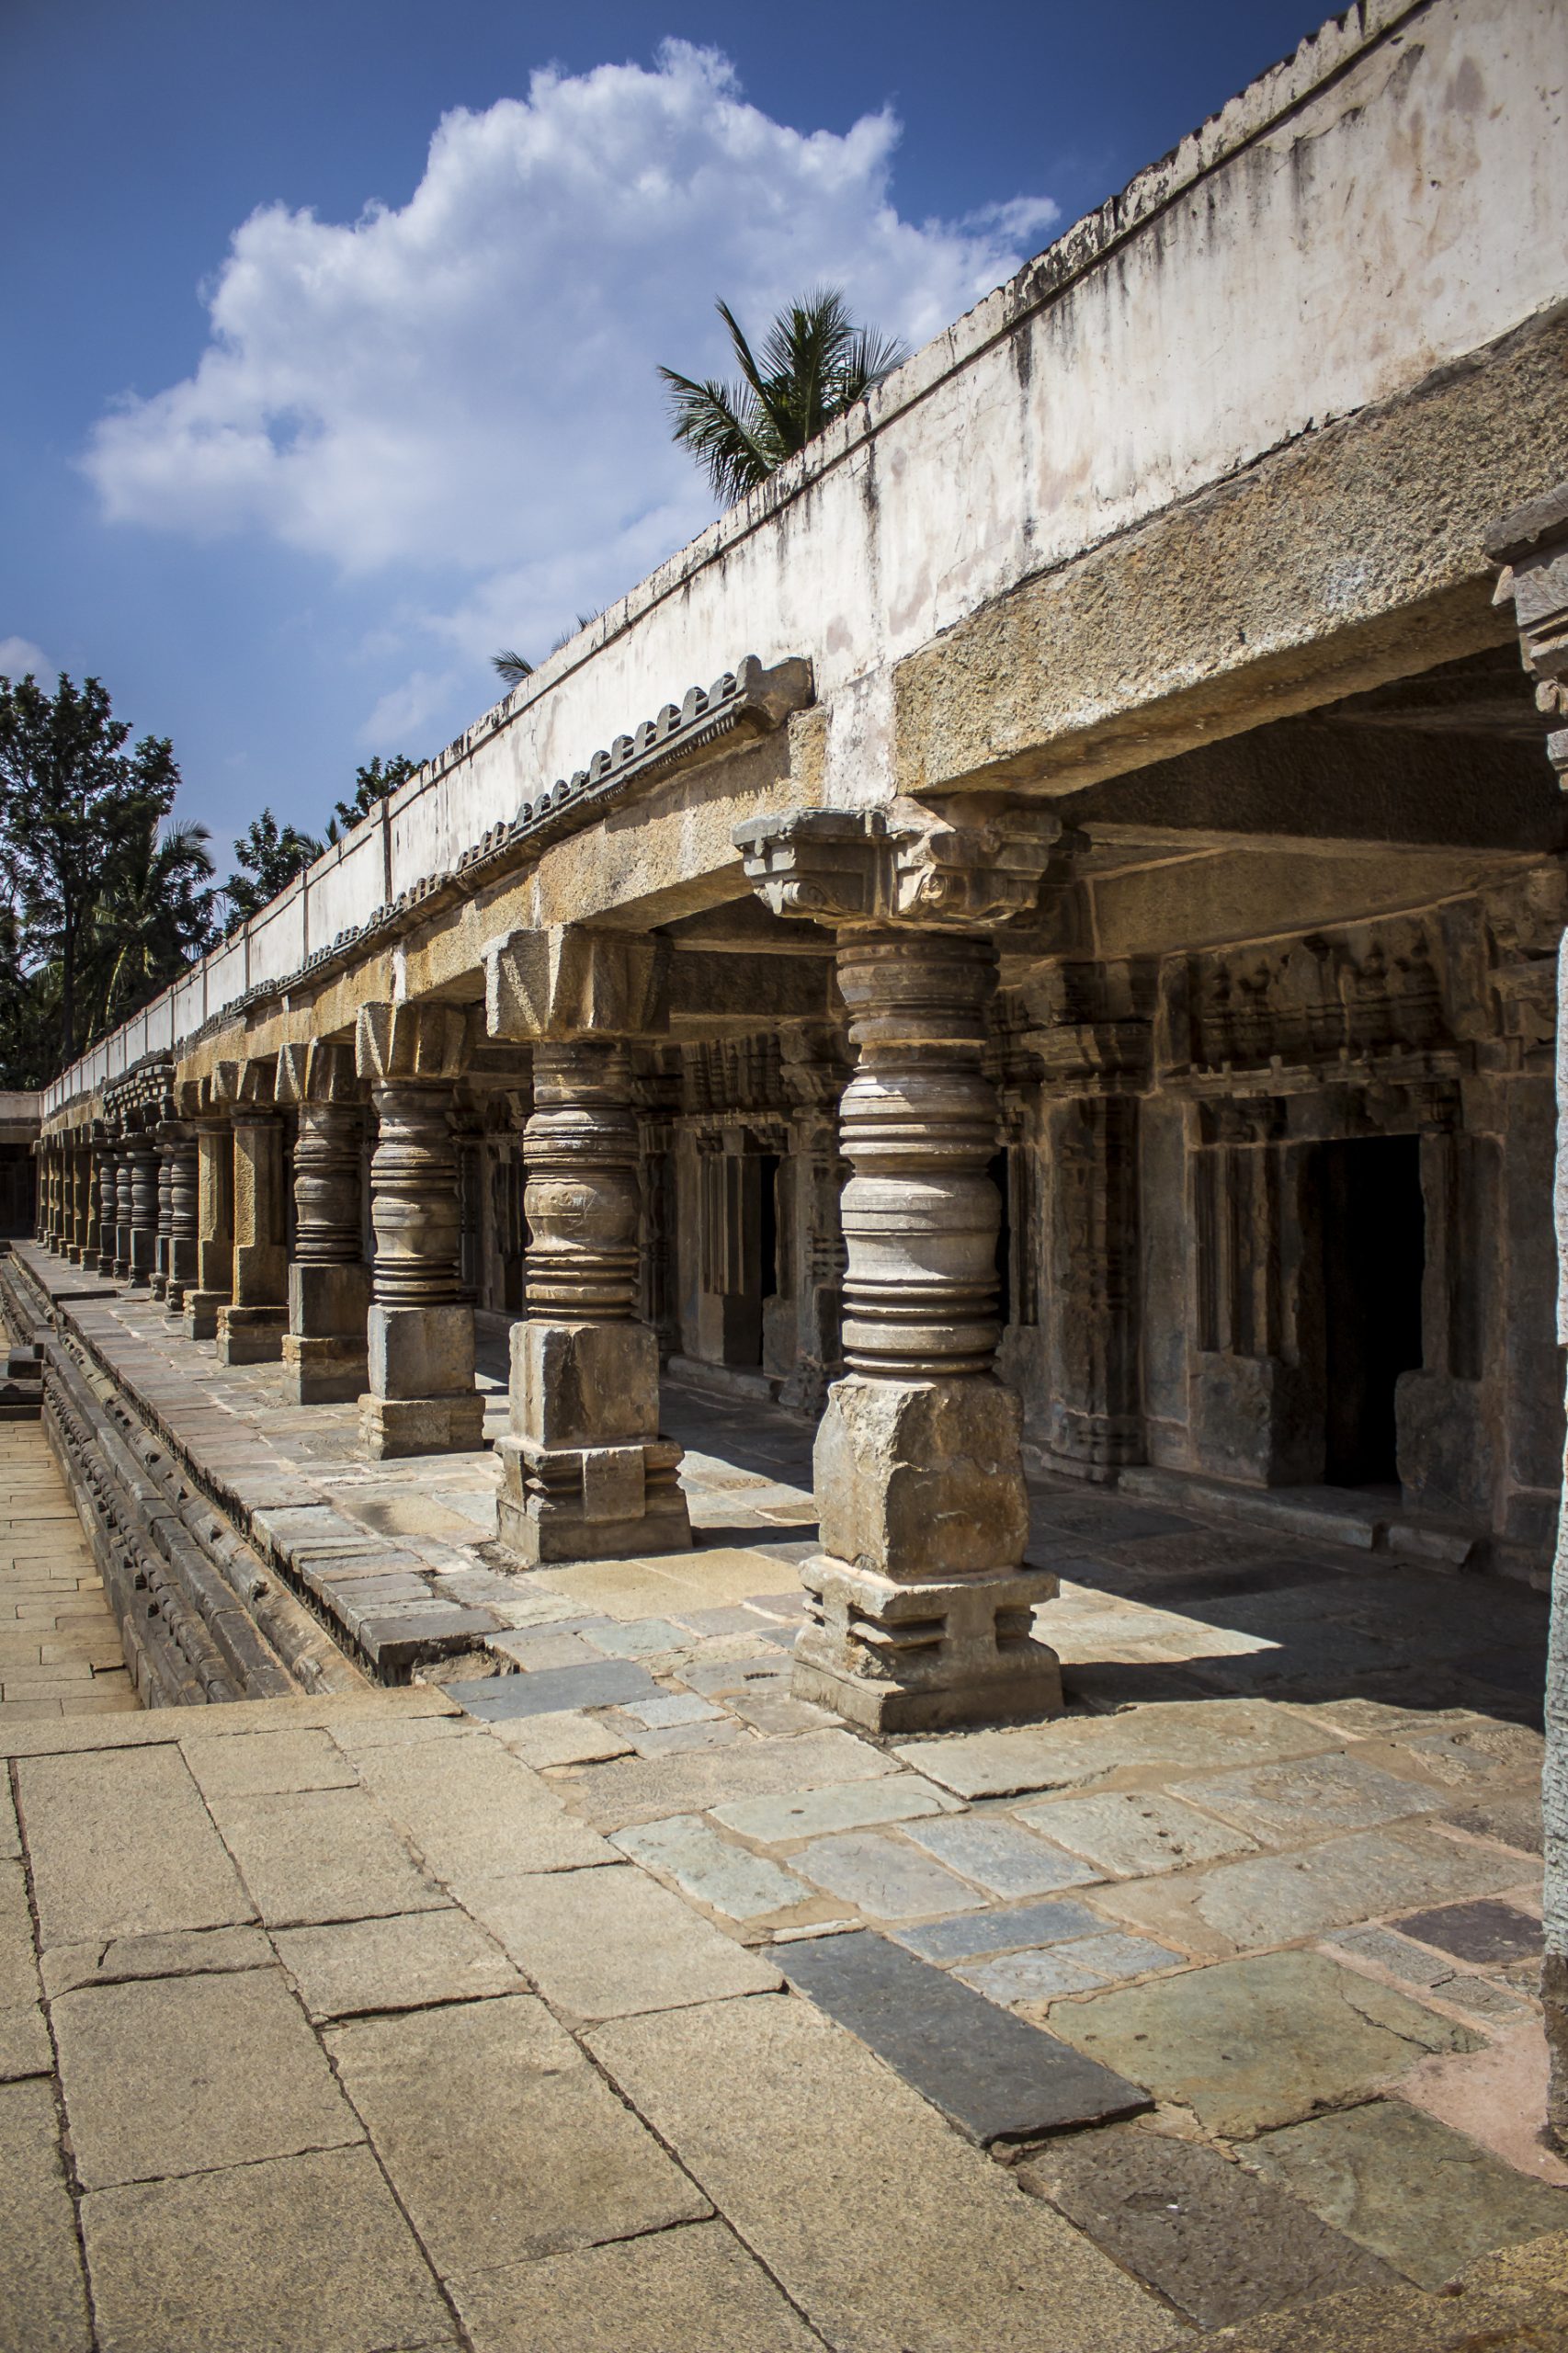 Pillars of an ancient building